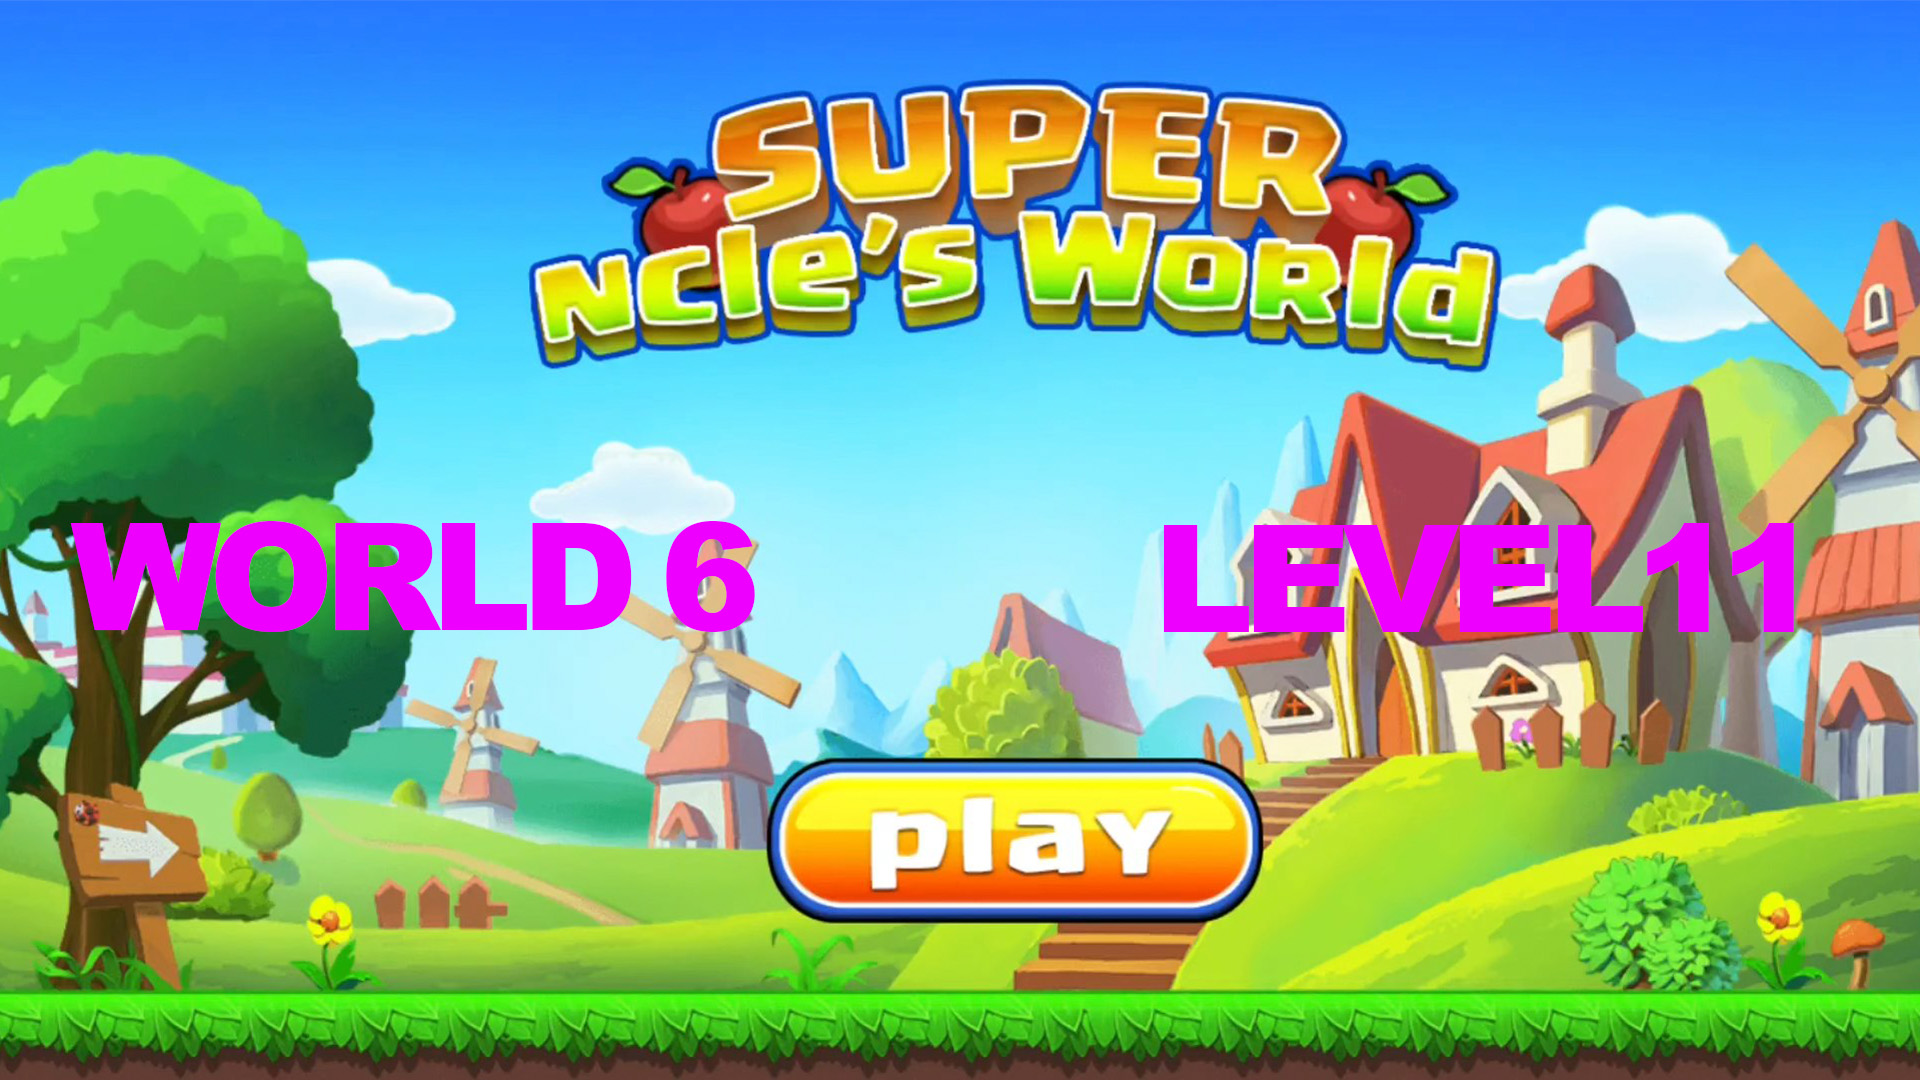 Super ncle's  World 6. Level 11.